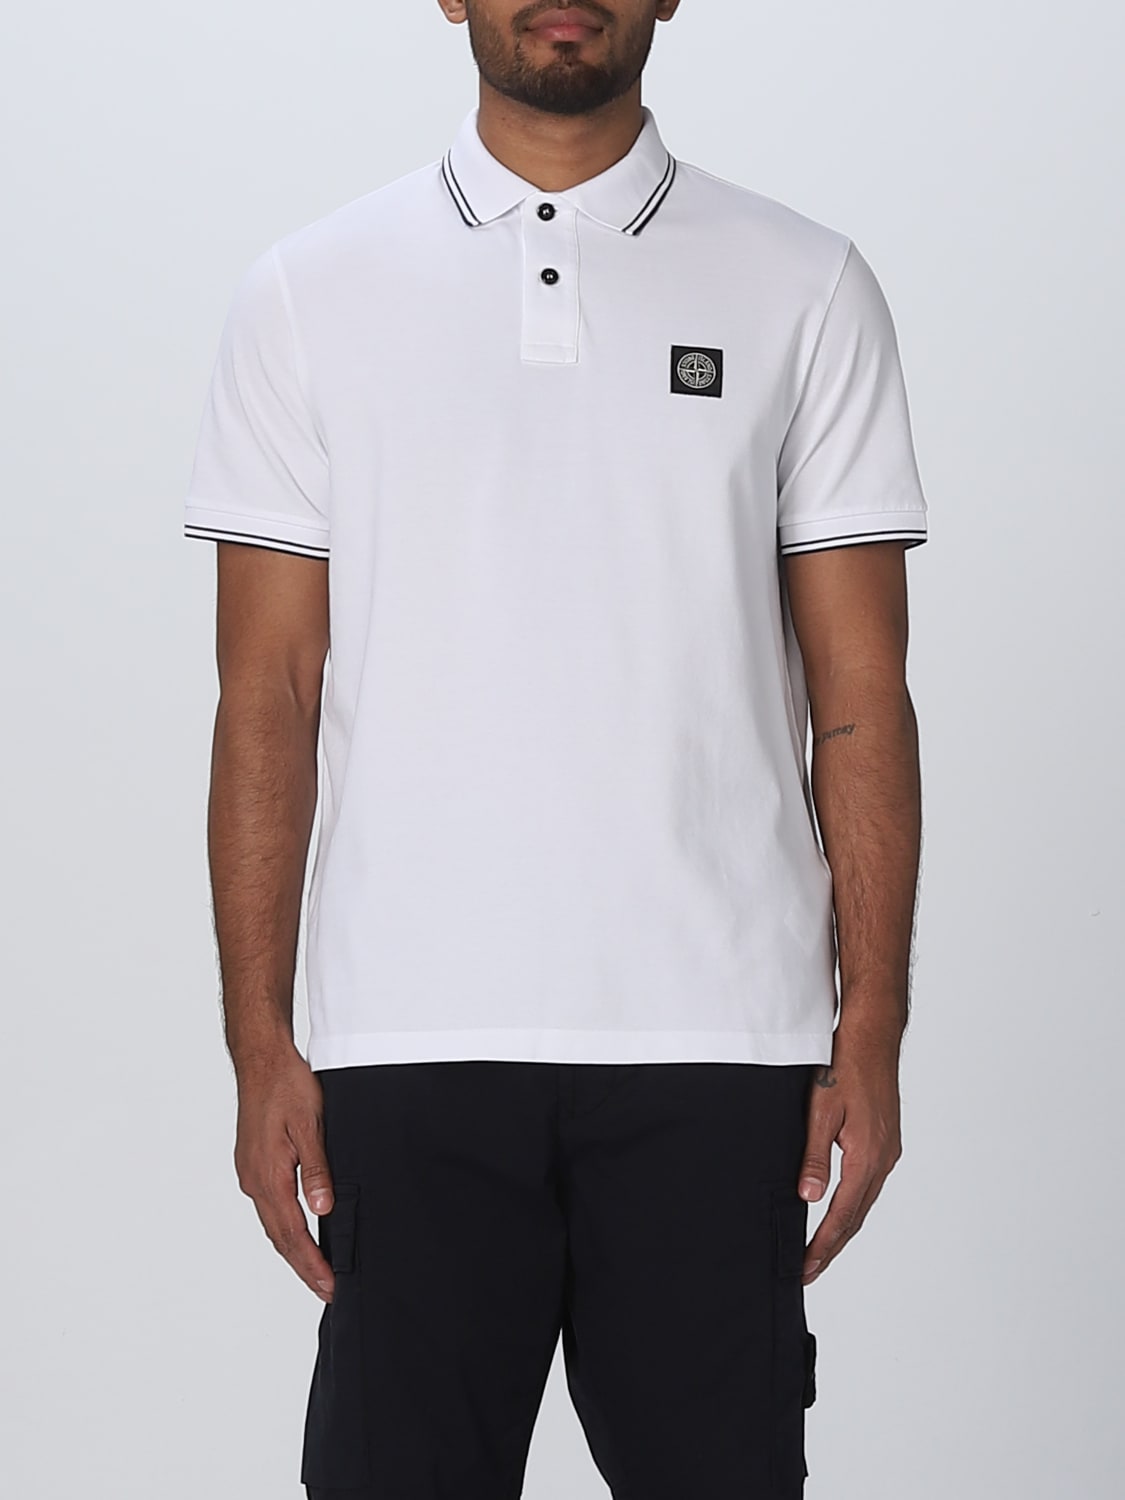 defect bekennen Opnemen STONE ISLAND: polo shirt for man - White | Stone Island polo shirt  10152SC18 online on GIGLIO.COM